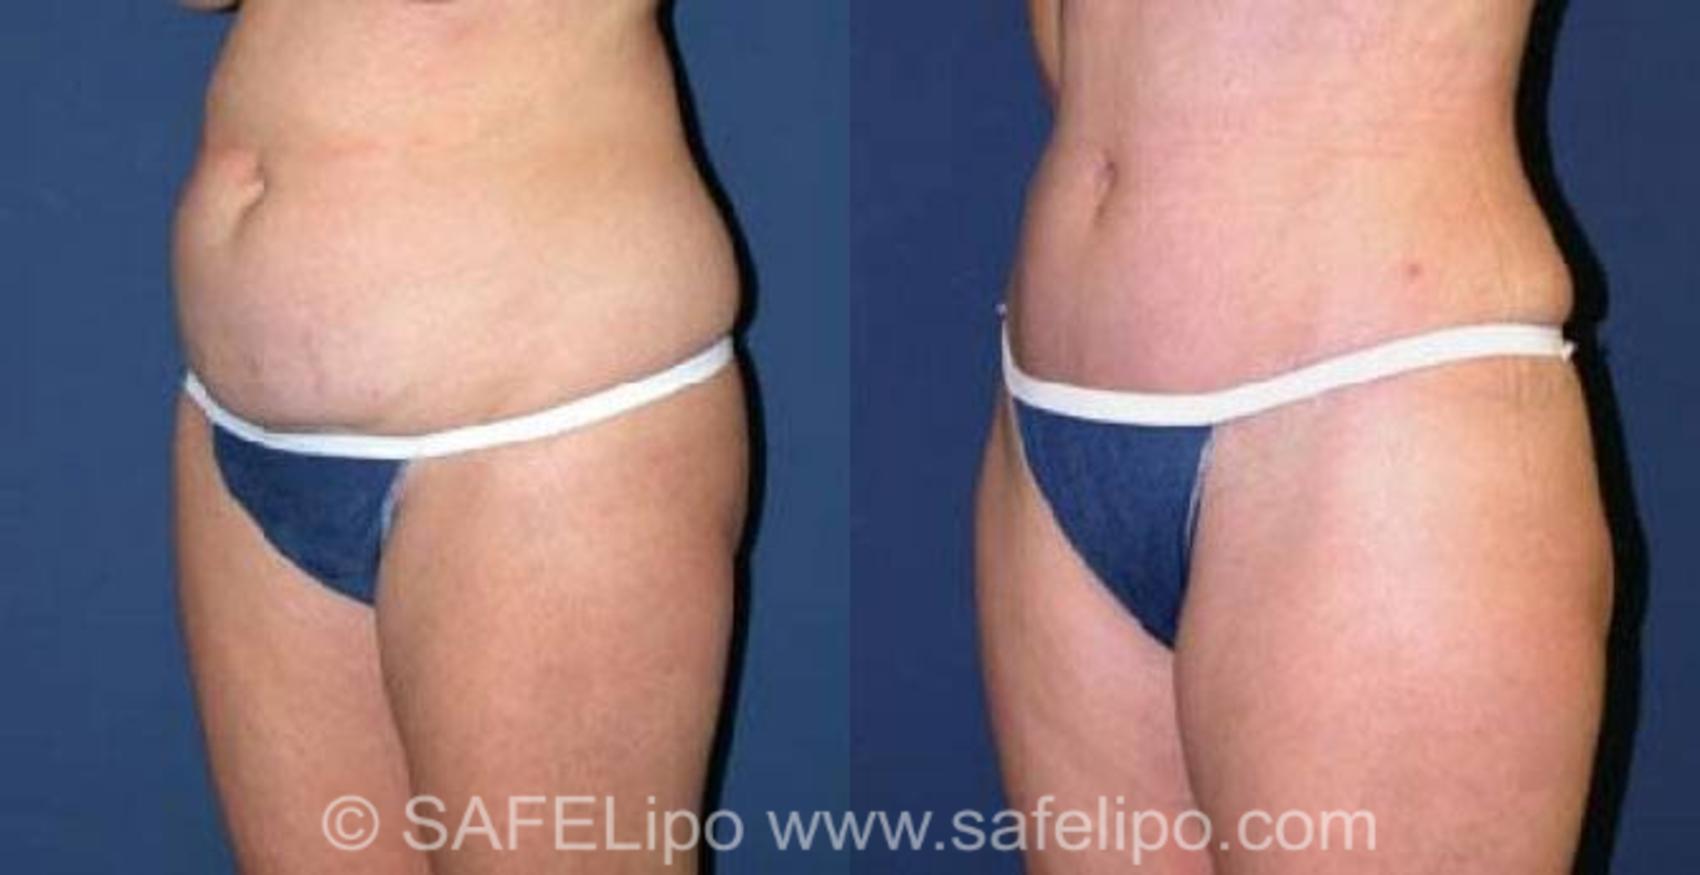 SAFELipoHD® Case 75 Before & After View #4 | SAFELipo®